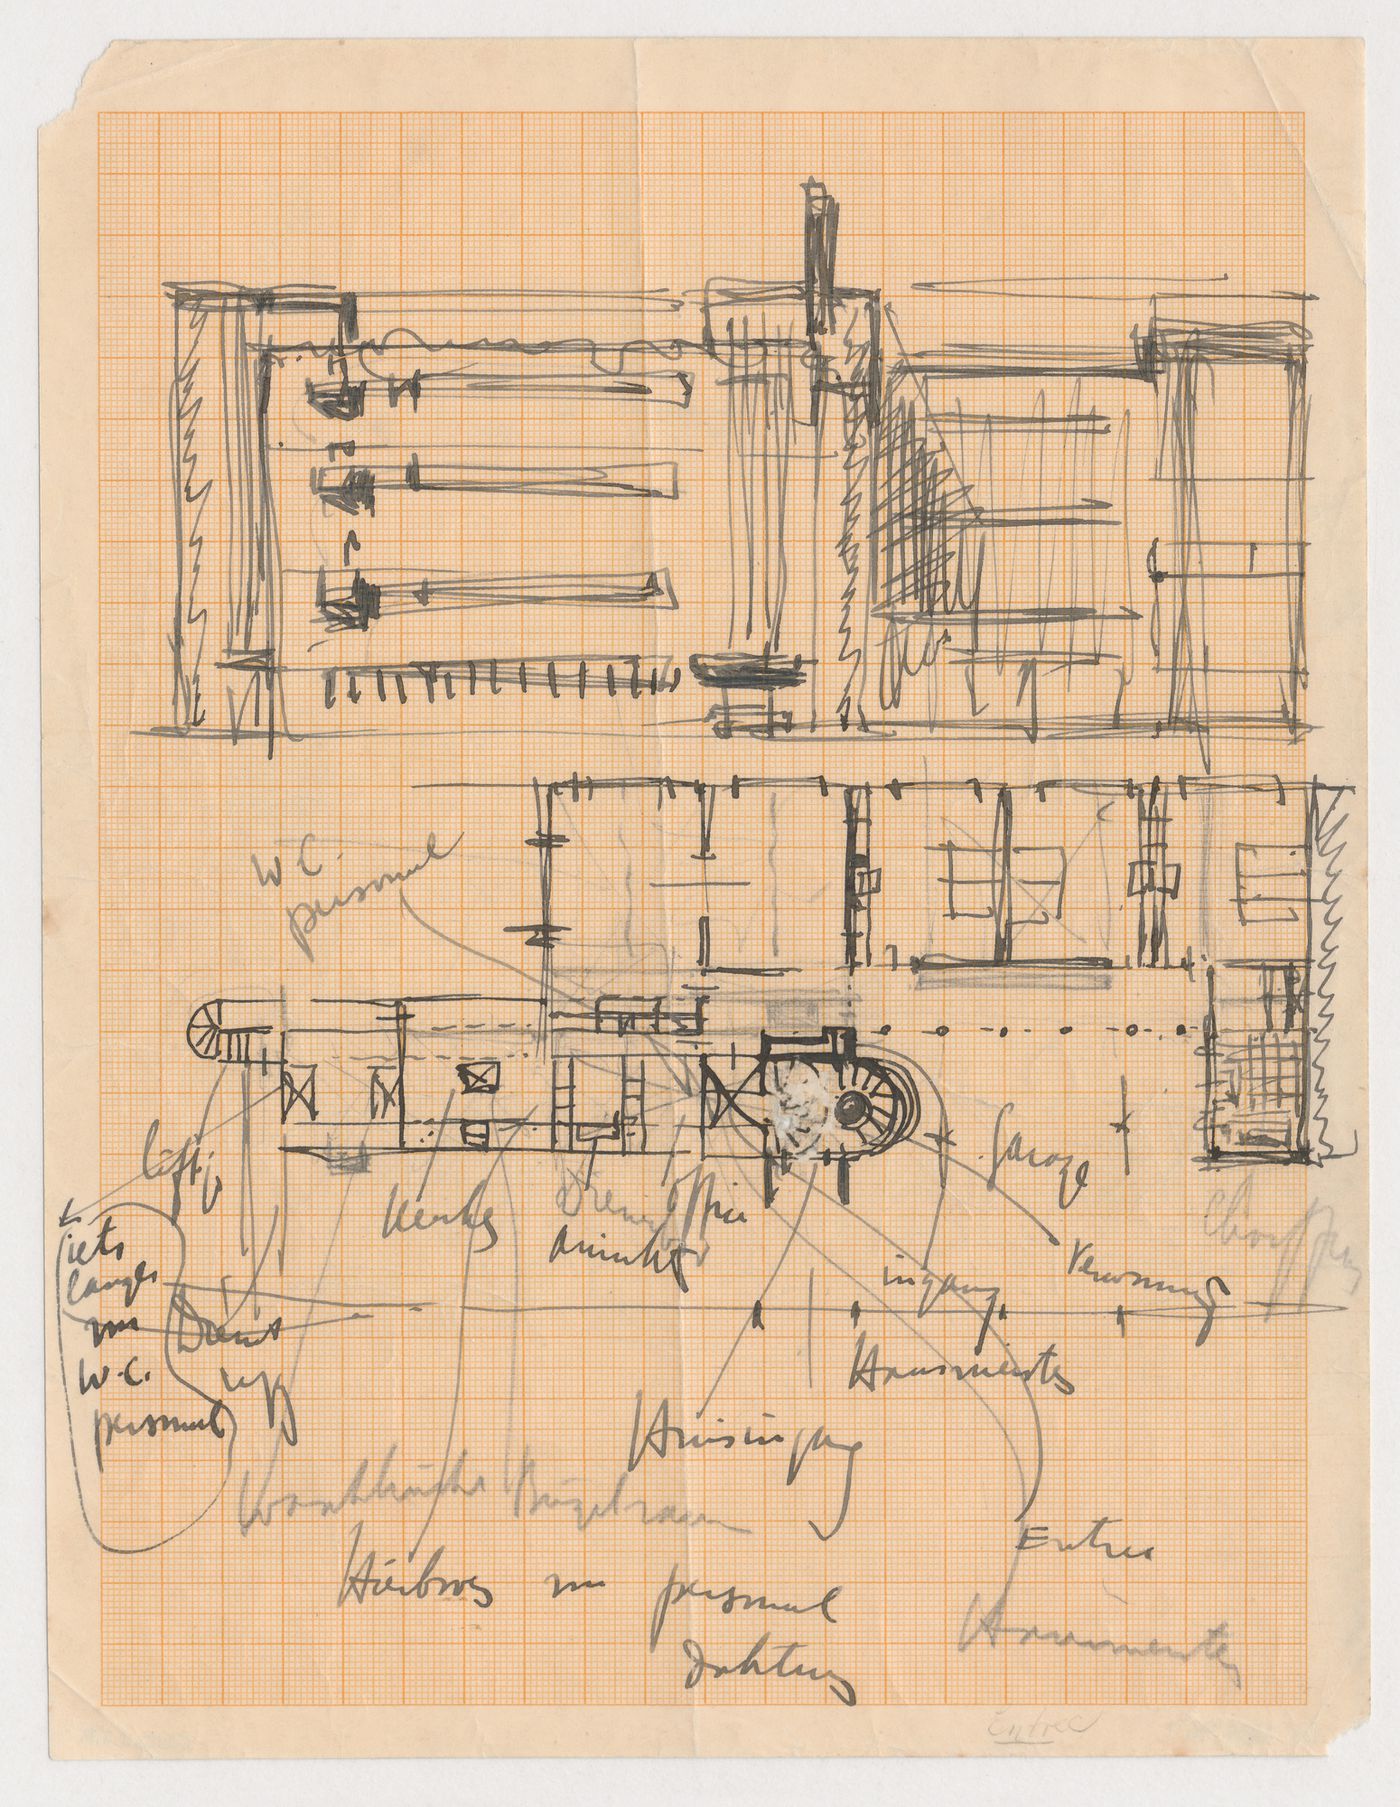 Sketch elevation and sketch plan for Three-Family House, Brno, Czechoslovakia (now Czech Republic)